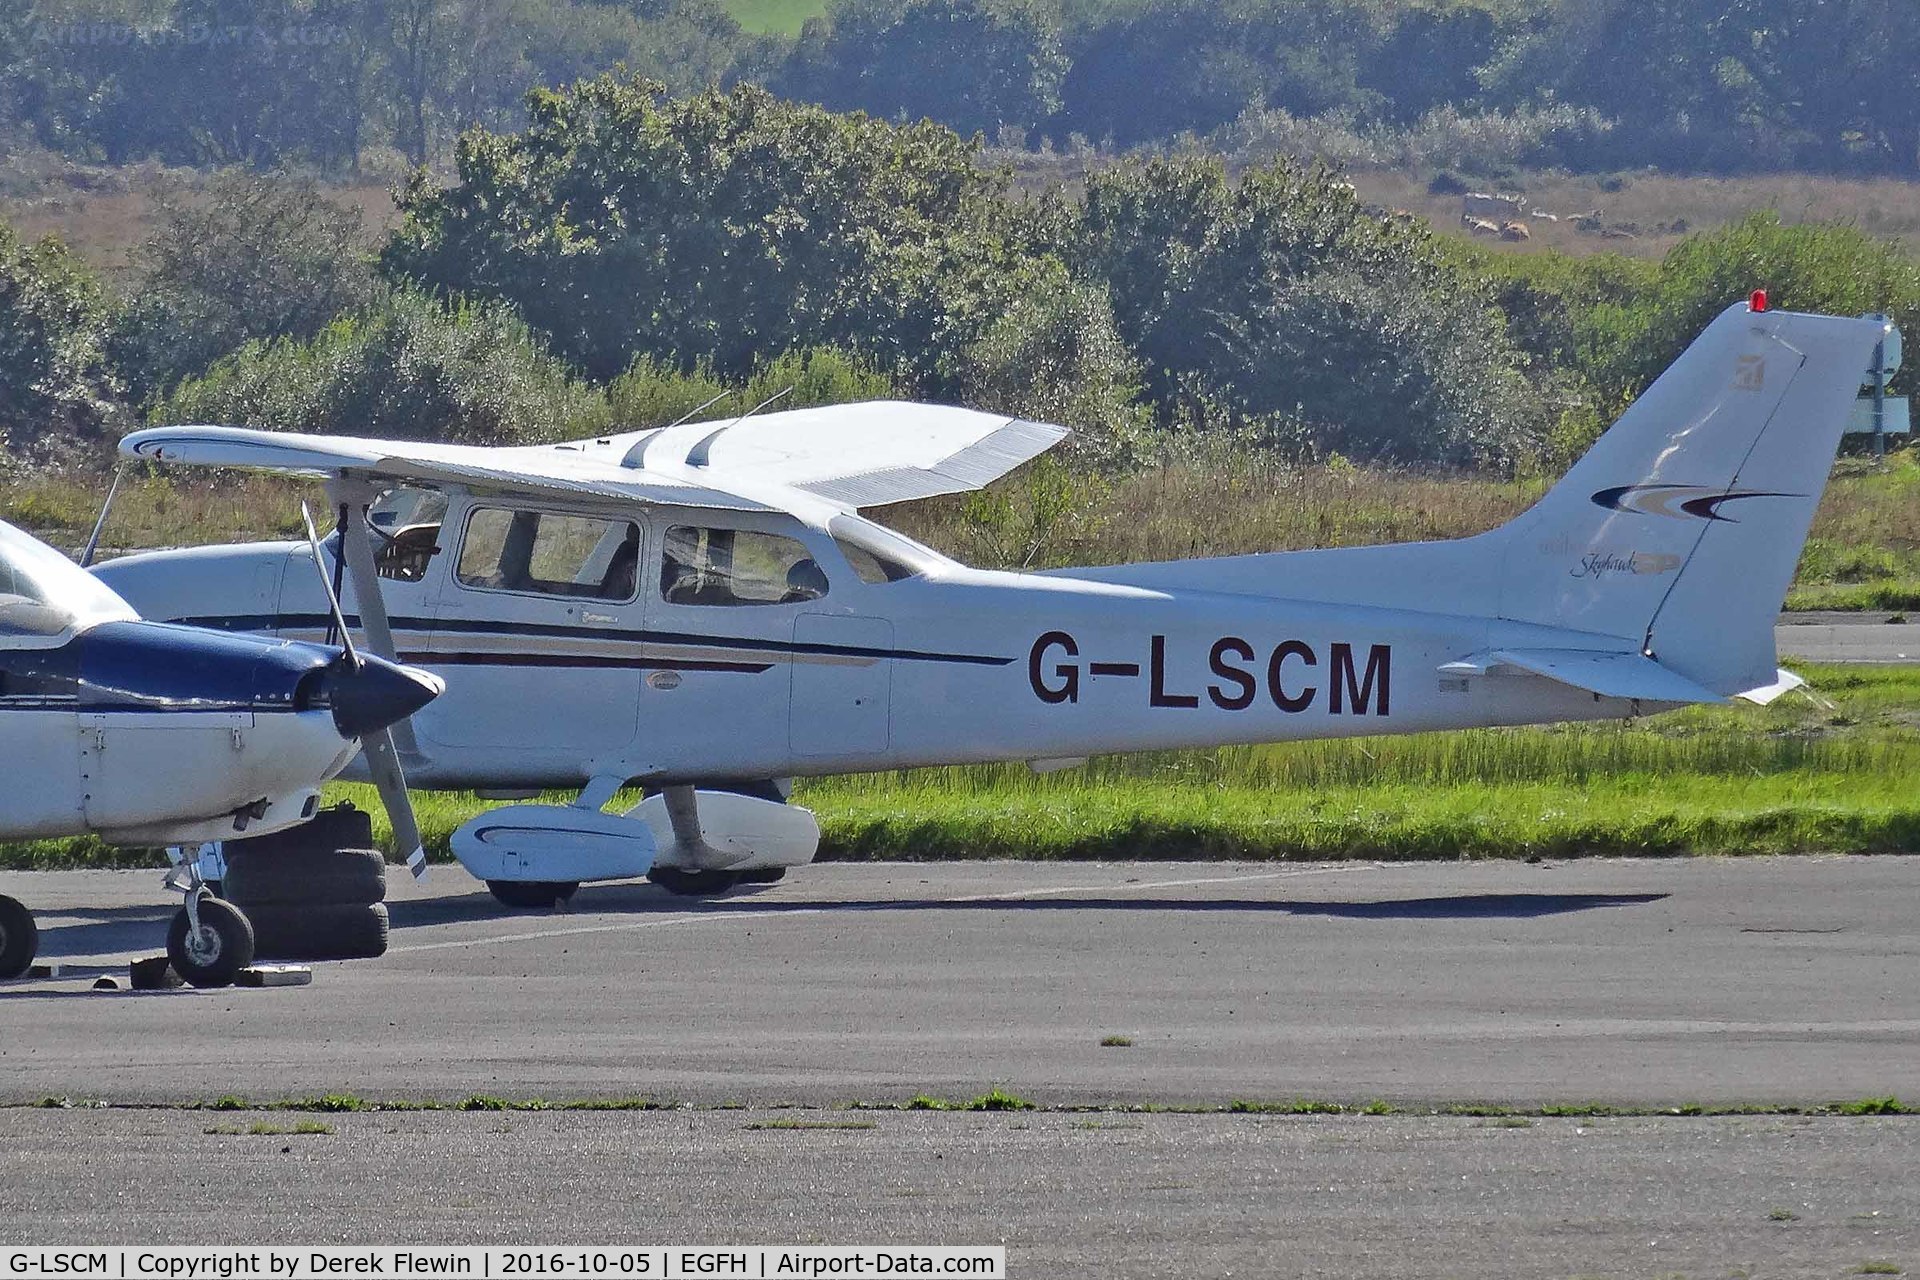 G-LSCM, 2000 Cessna 172S Skyhawk SP C/N 172S-8445, Skyhawk, Exeter based, seen parked up.